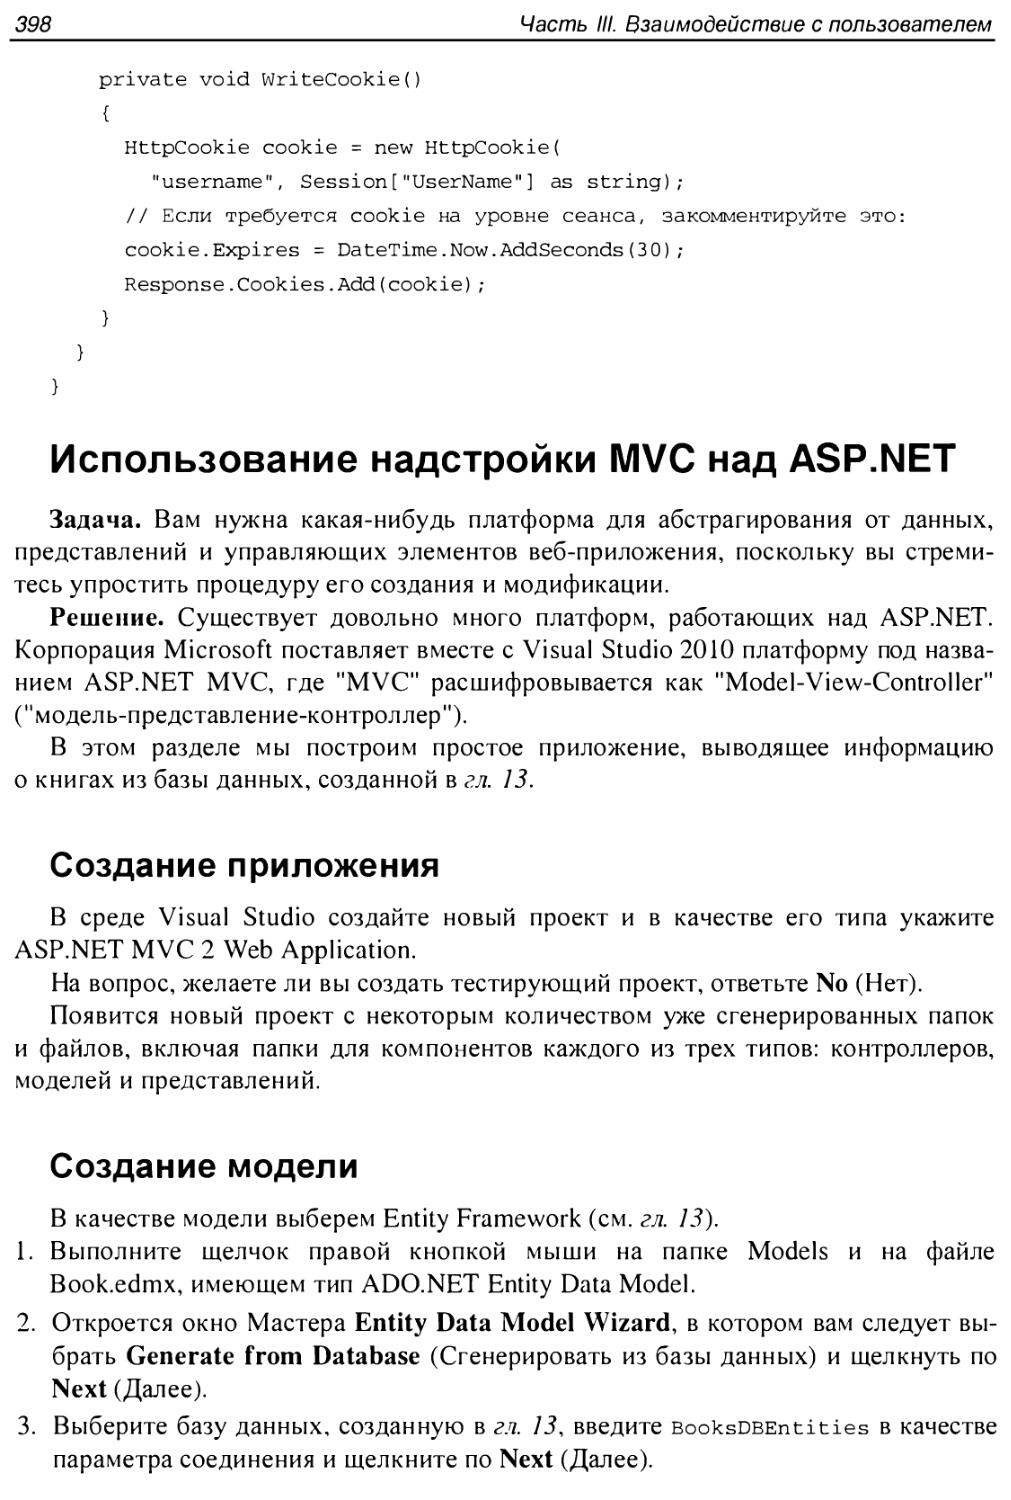 Использование надстройки MVC над ASP.NET